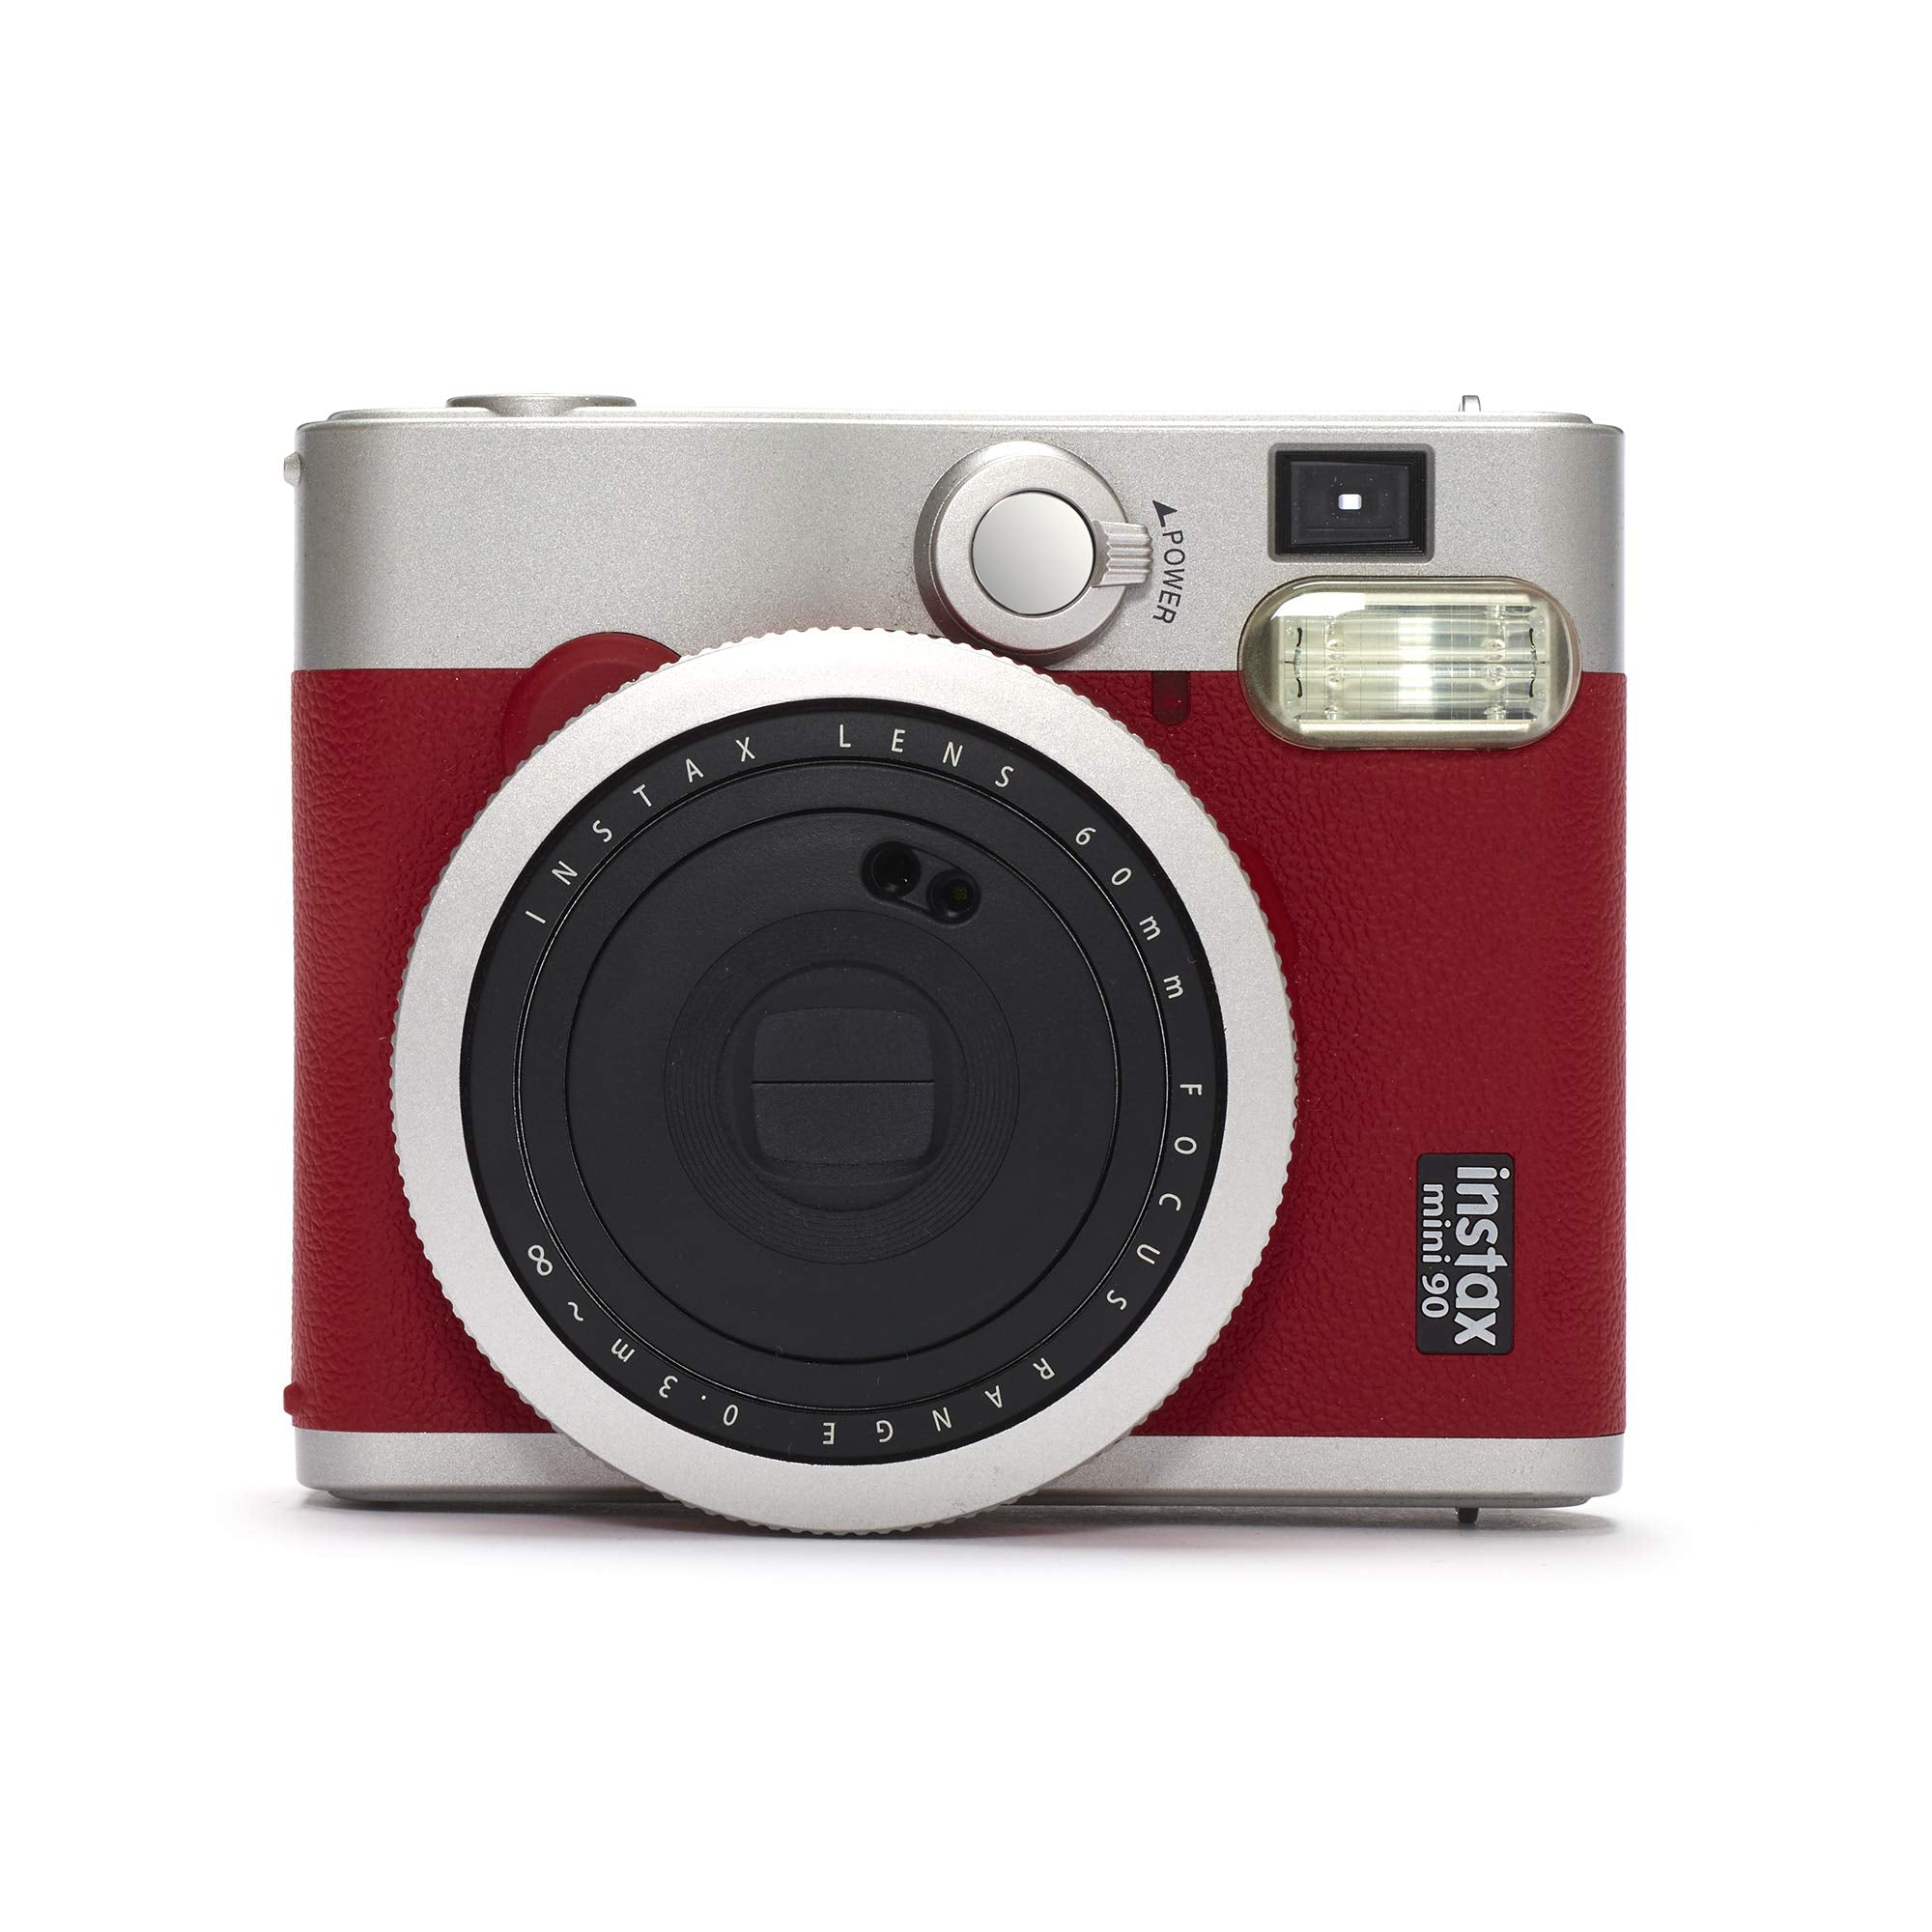 instax mini 90 Neo Classic Camera, Red